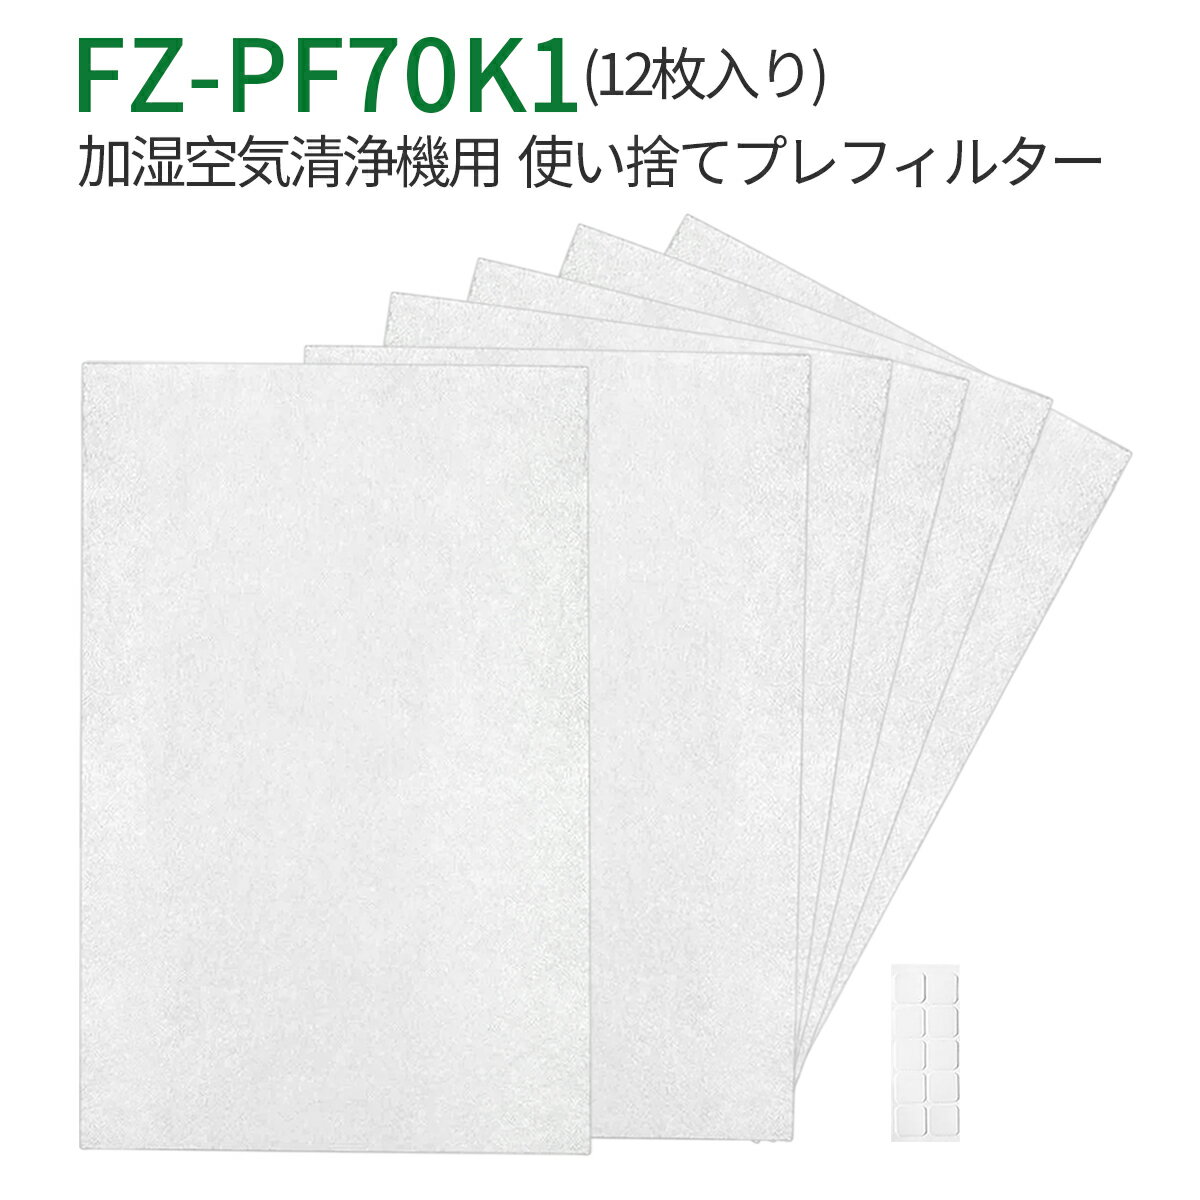 FZ-PF70K1 使い捨てプレフィルター（12枚入） fz-pf70k1 シャープ 加湿空気清浄機 プレフィルター 「互換品」